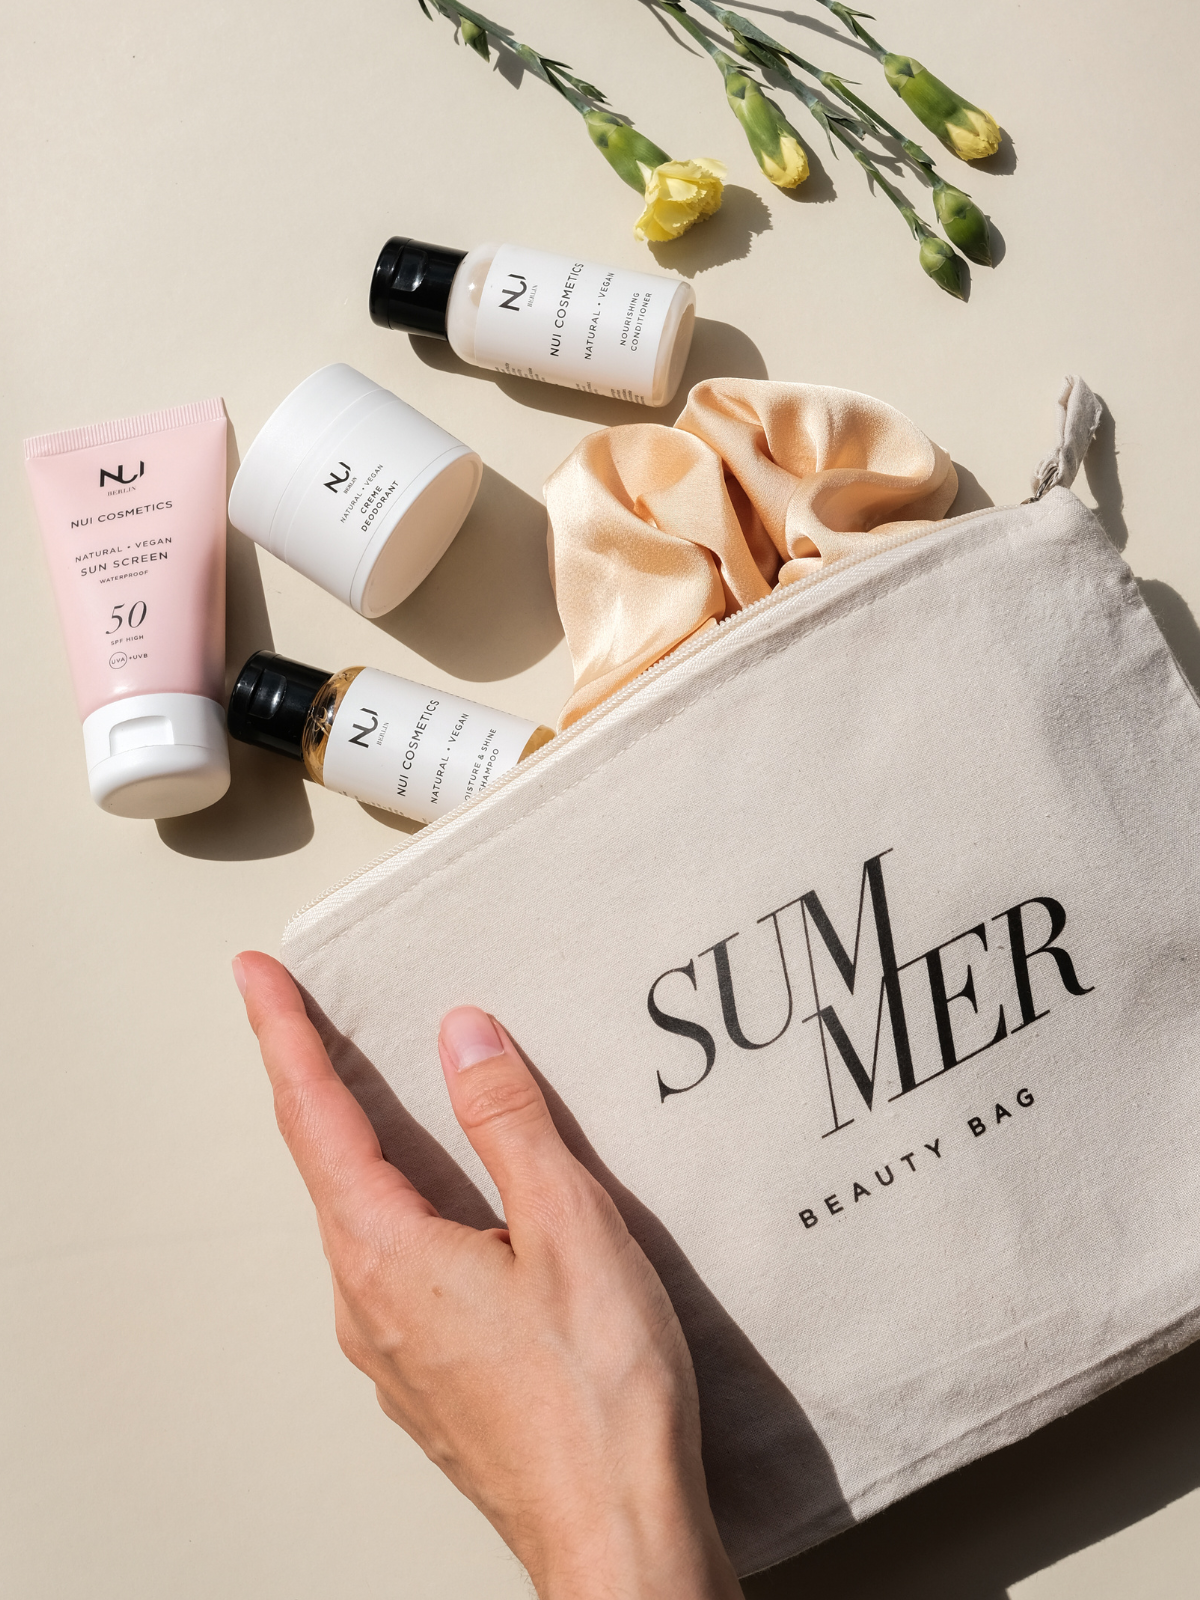 NUI Natural & Vegan Summer Beauty Bag